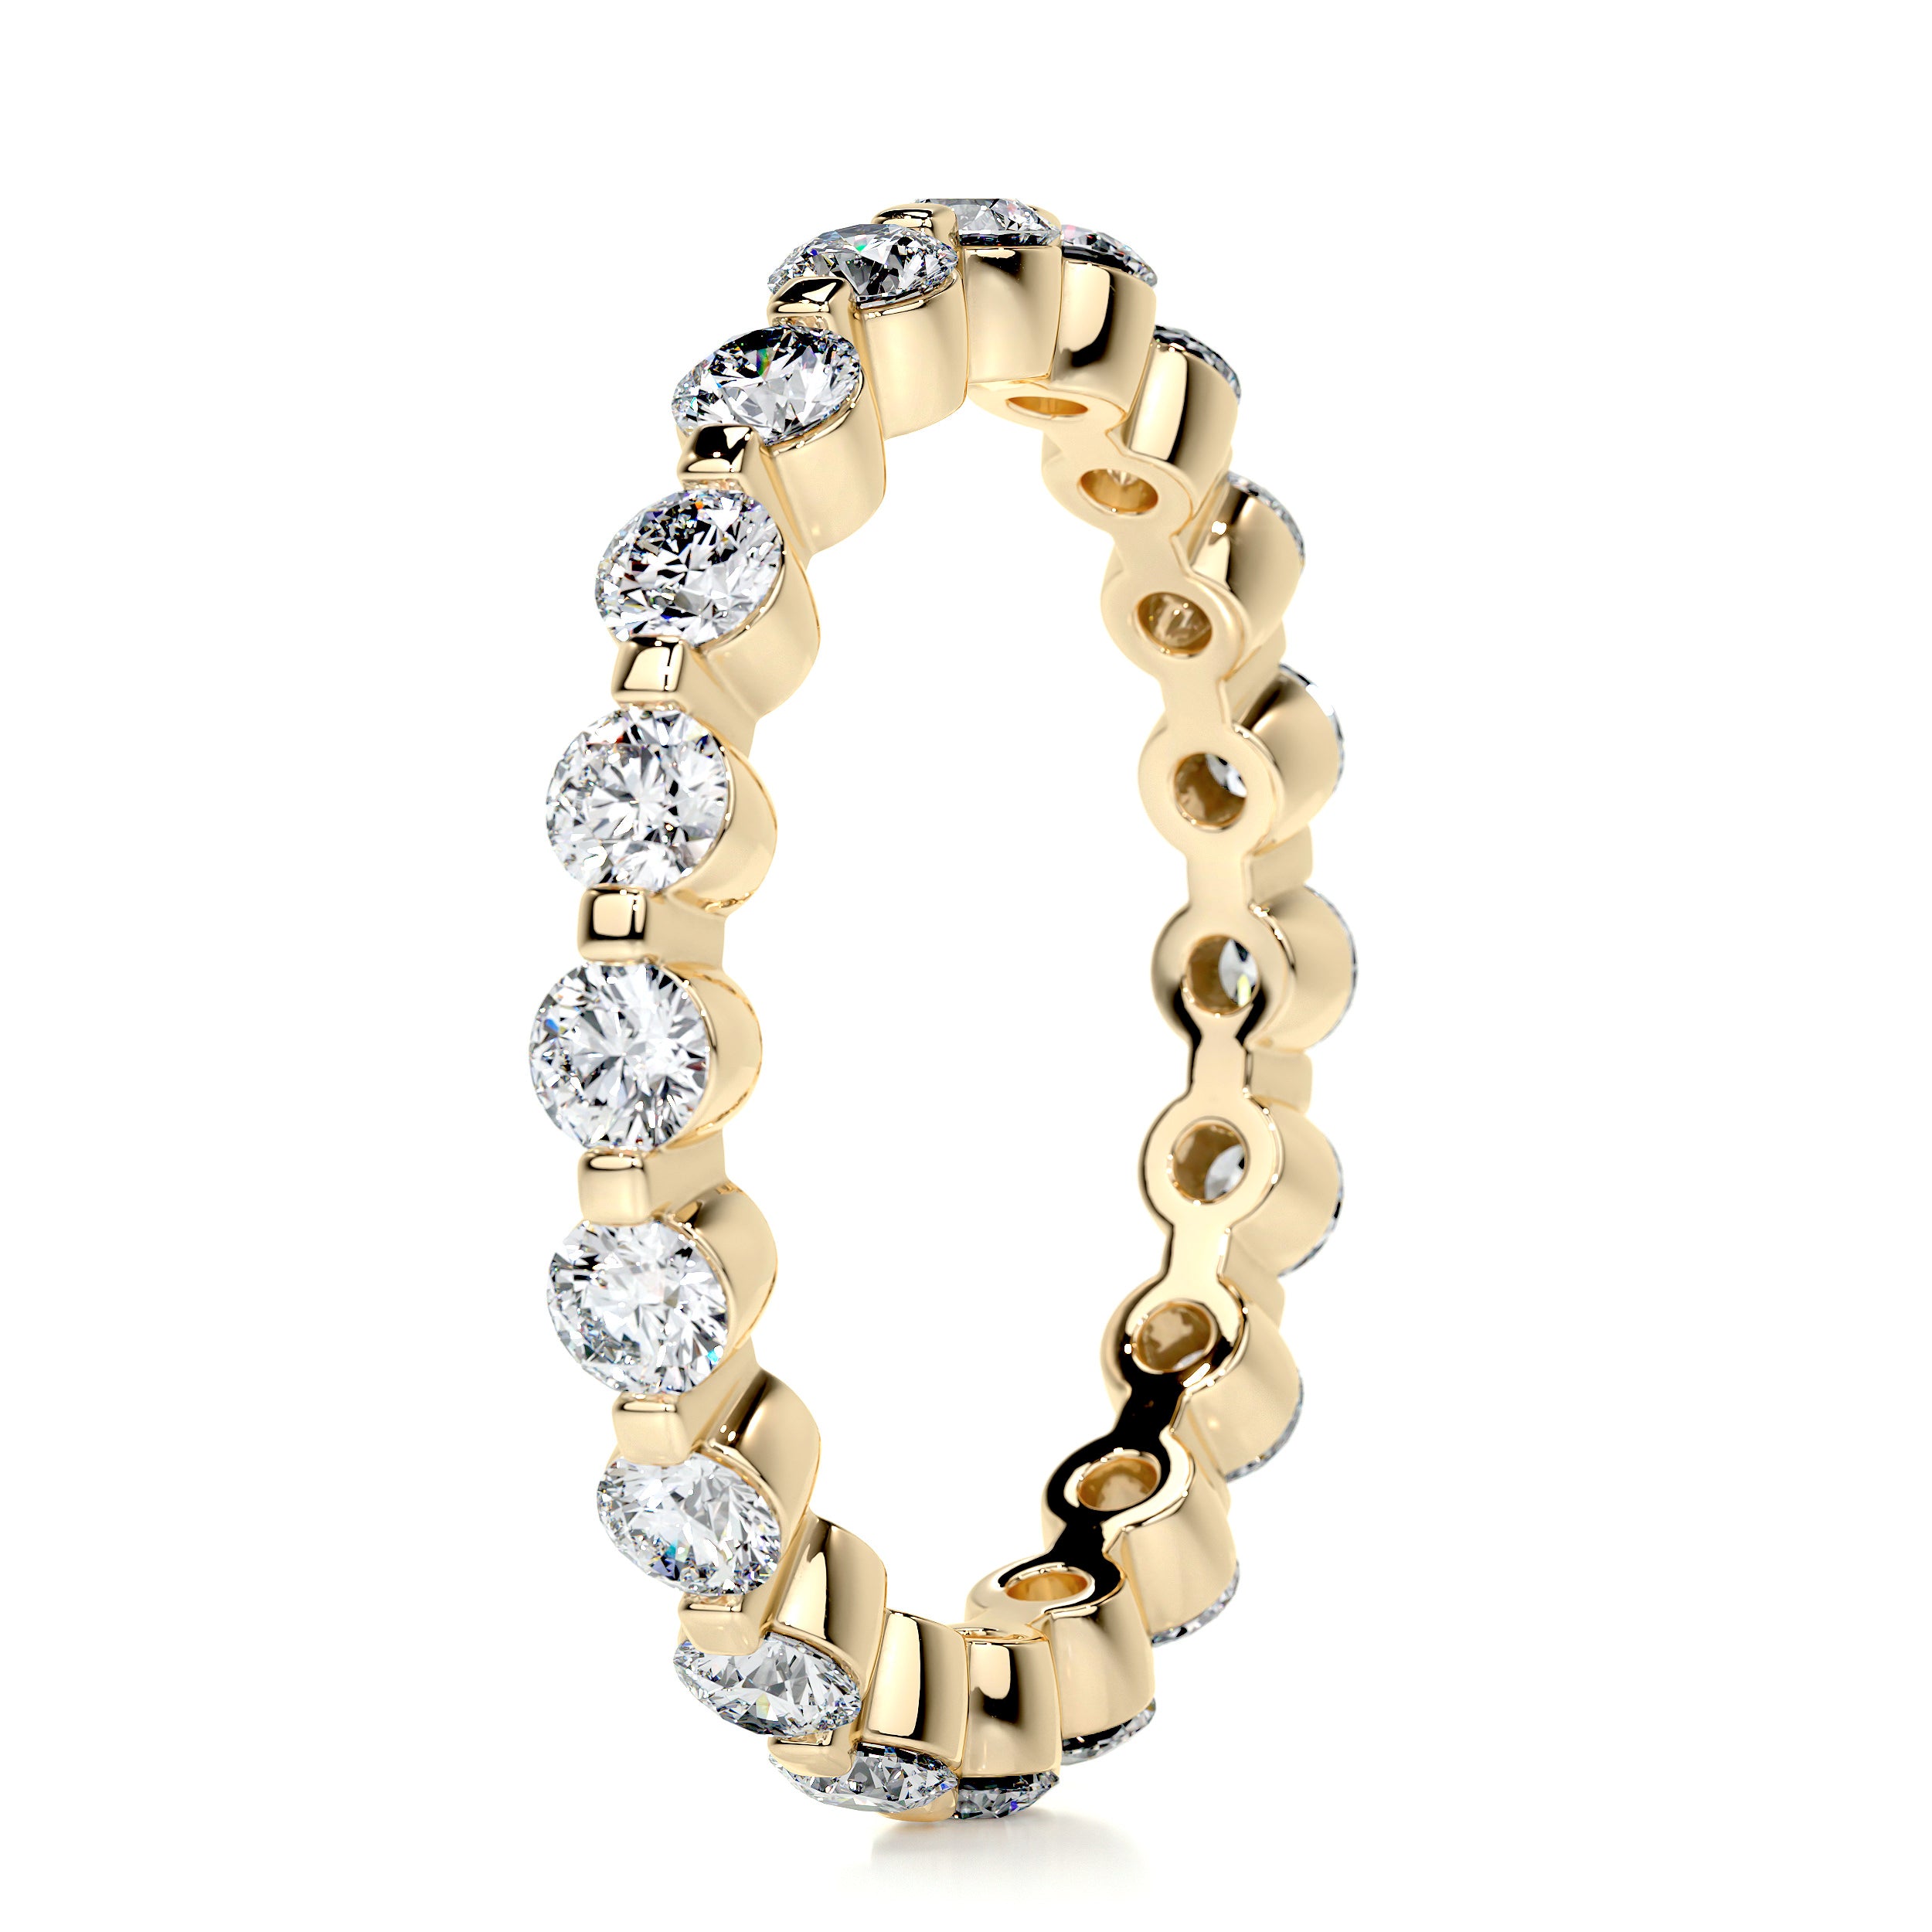 Josie Eternity Wedding Ring   (1.75 Carat) -18K Yellow Gold